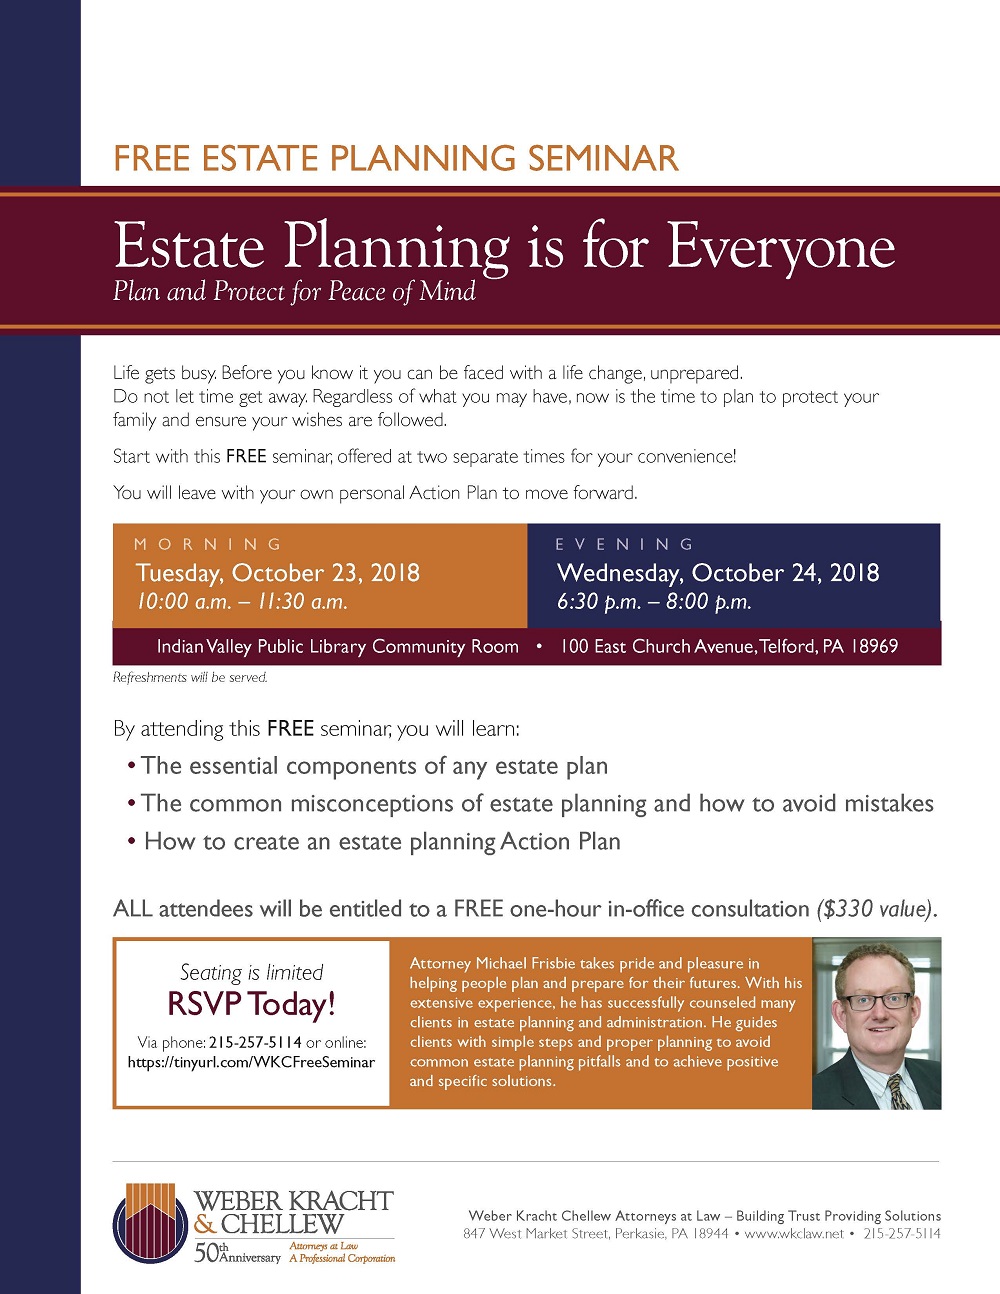 WKC Estate Planning Flyer FINAL_resize